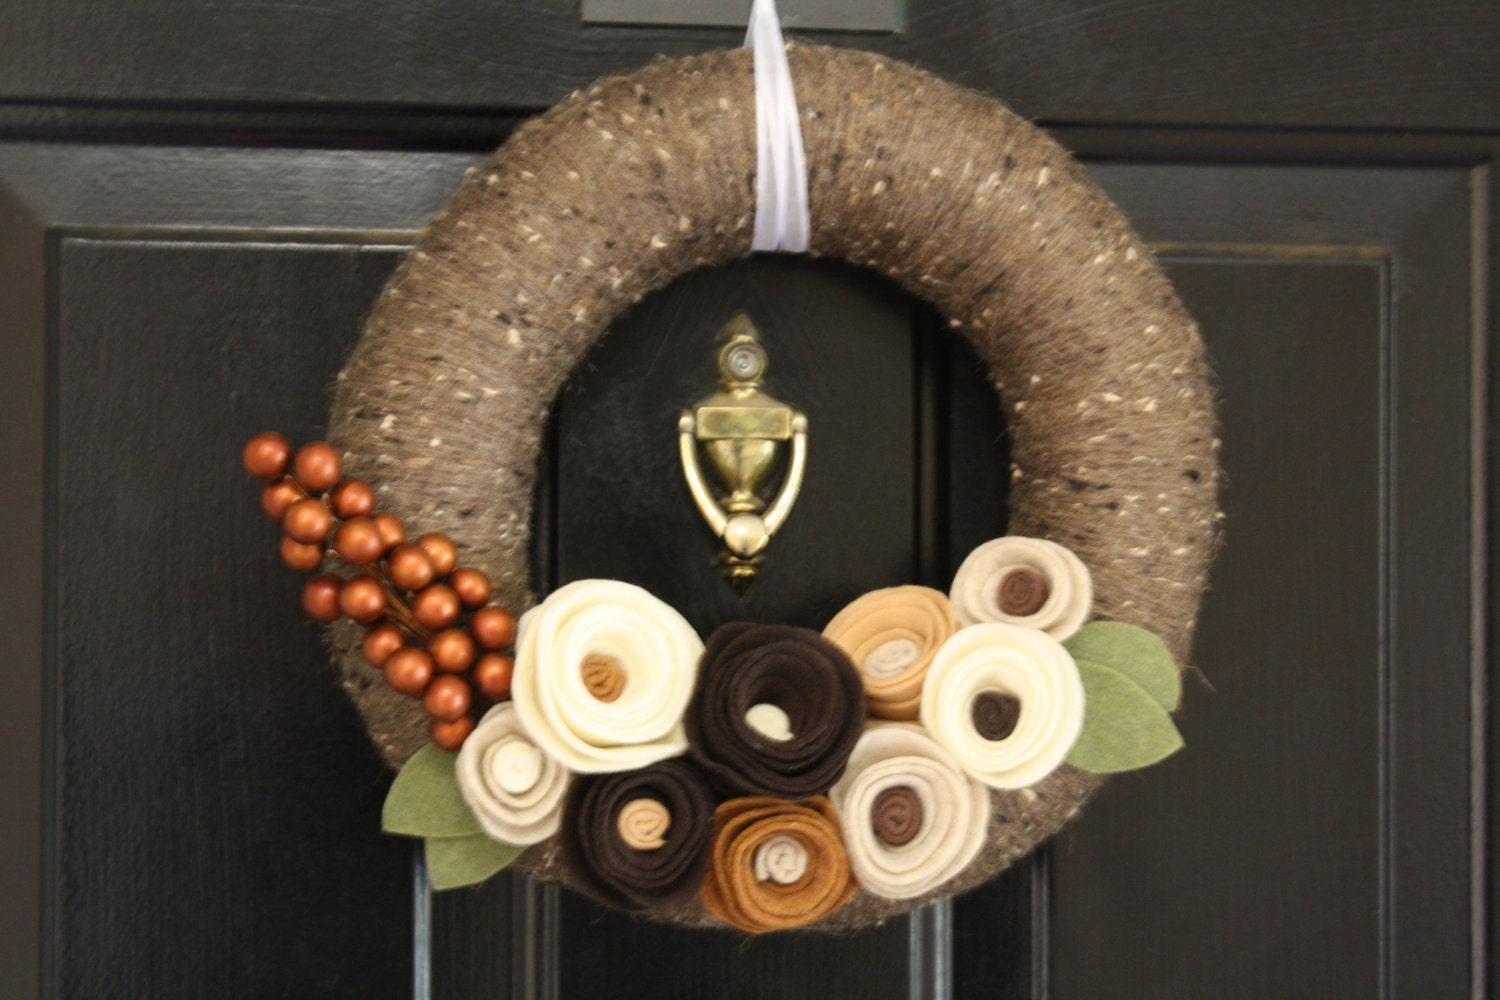 Yarn Wreath Handmade Decoration- Vintage Brown 12 inch